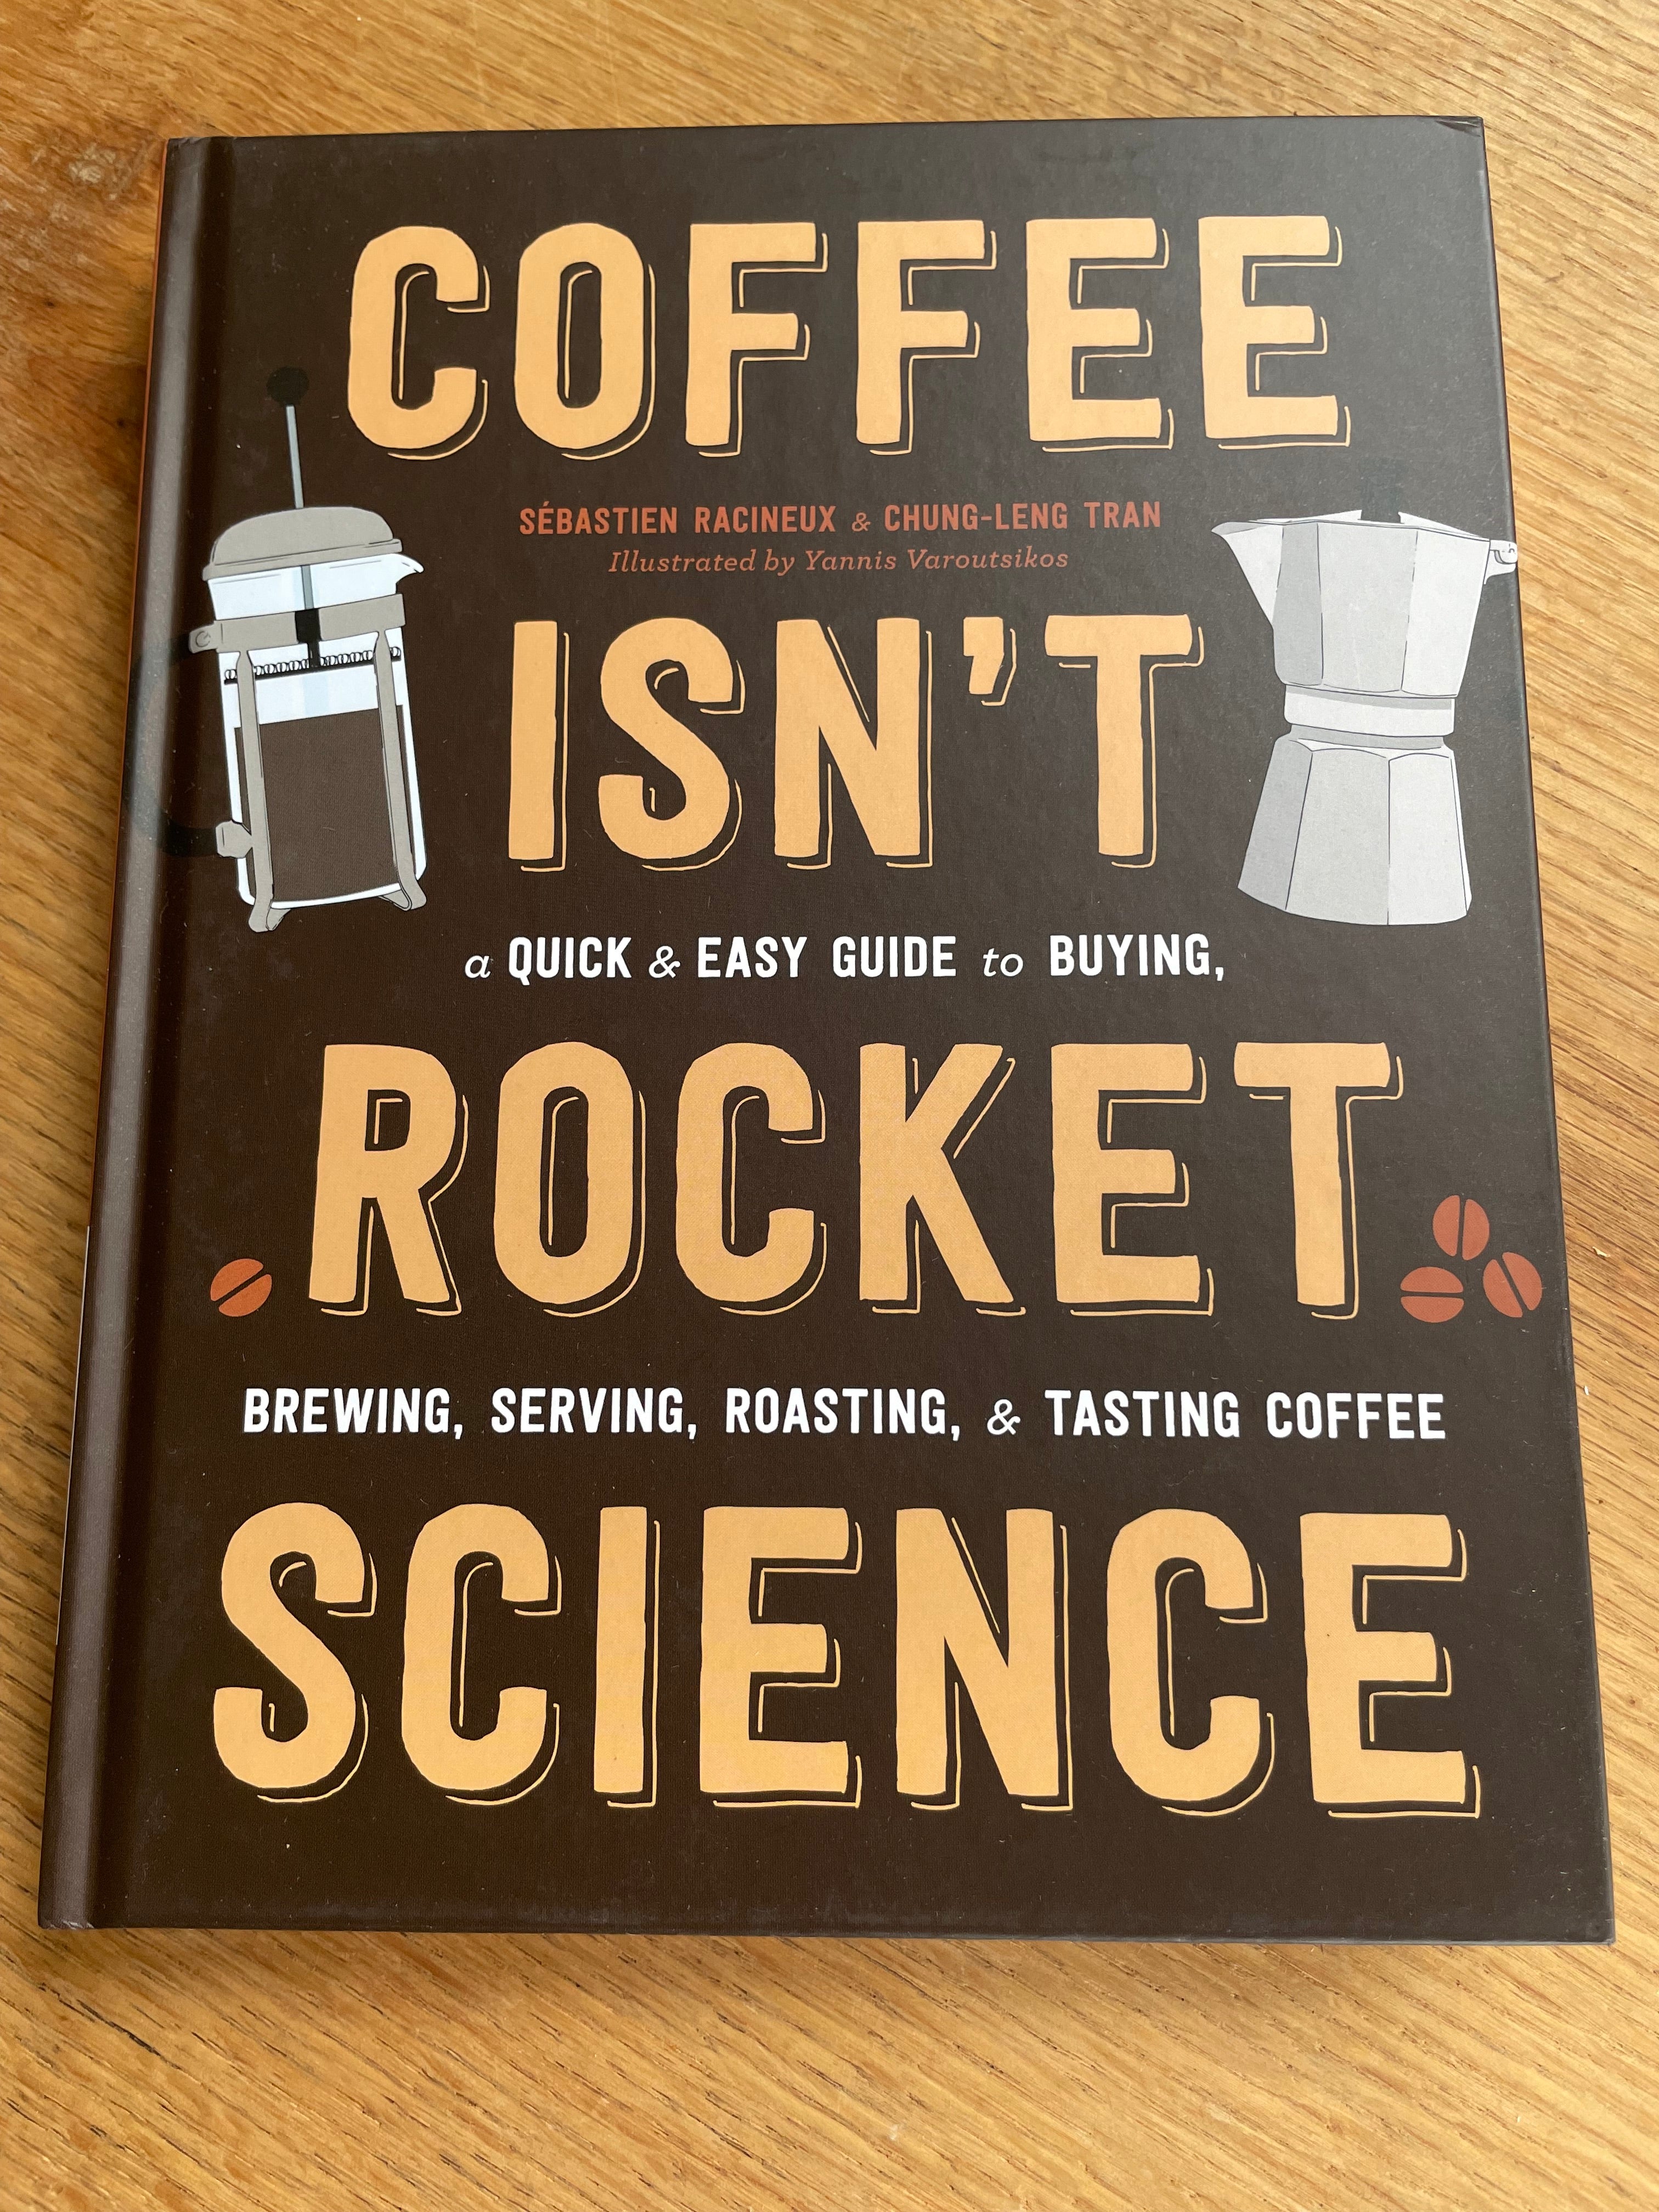 Title: Coffee Isn't Rocket Science - Book by Sebastien Racineu & Chung Leng Tran